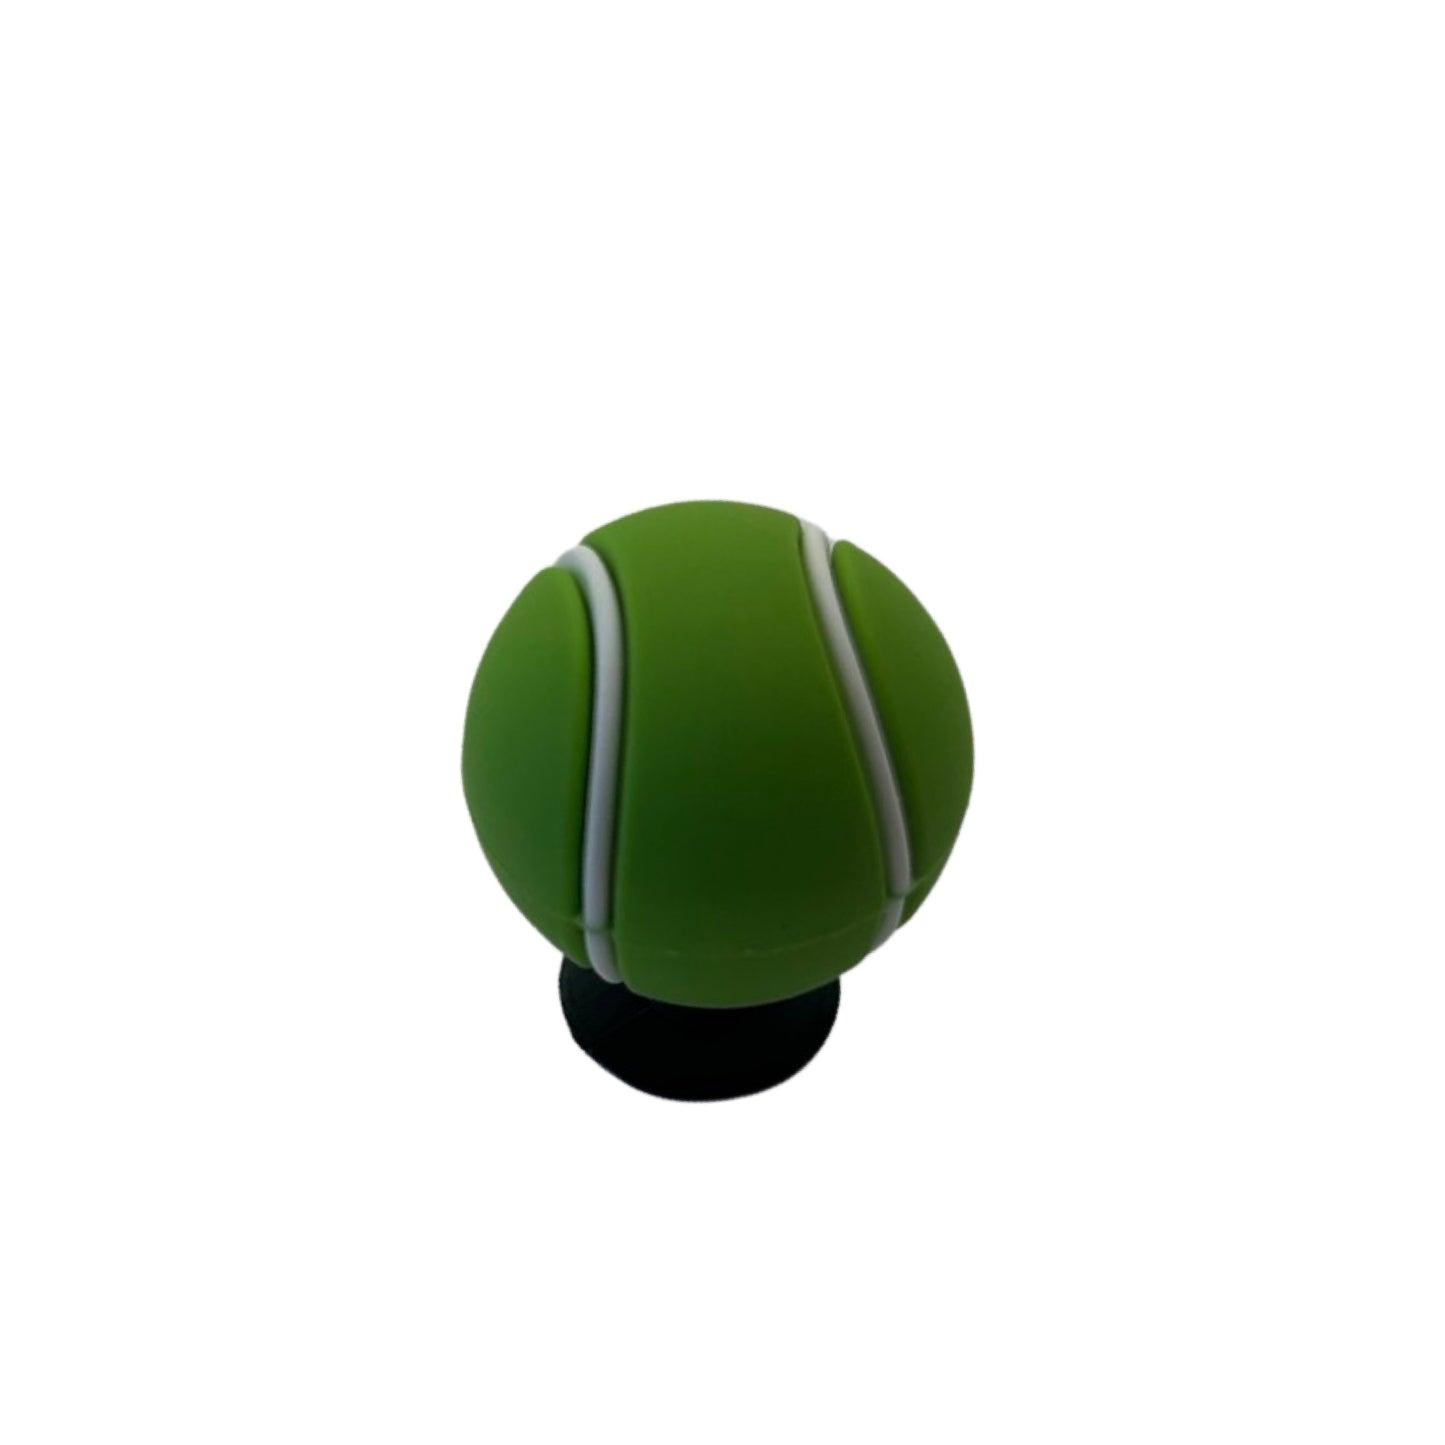 Bling Charm - TENNIS BALL 3D